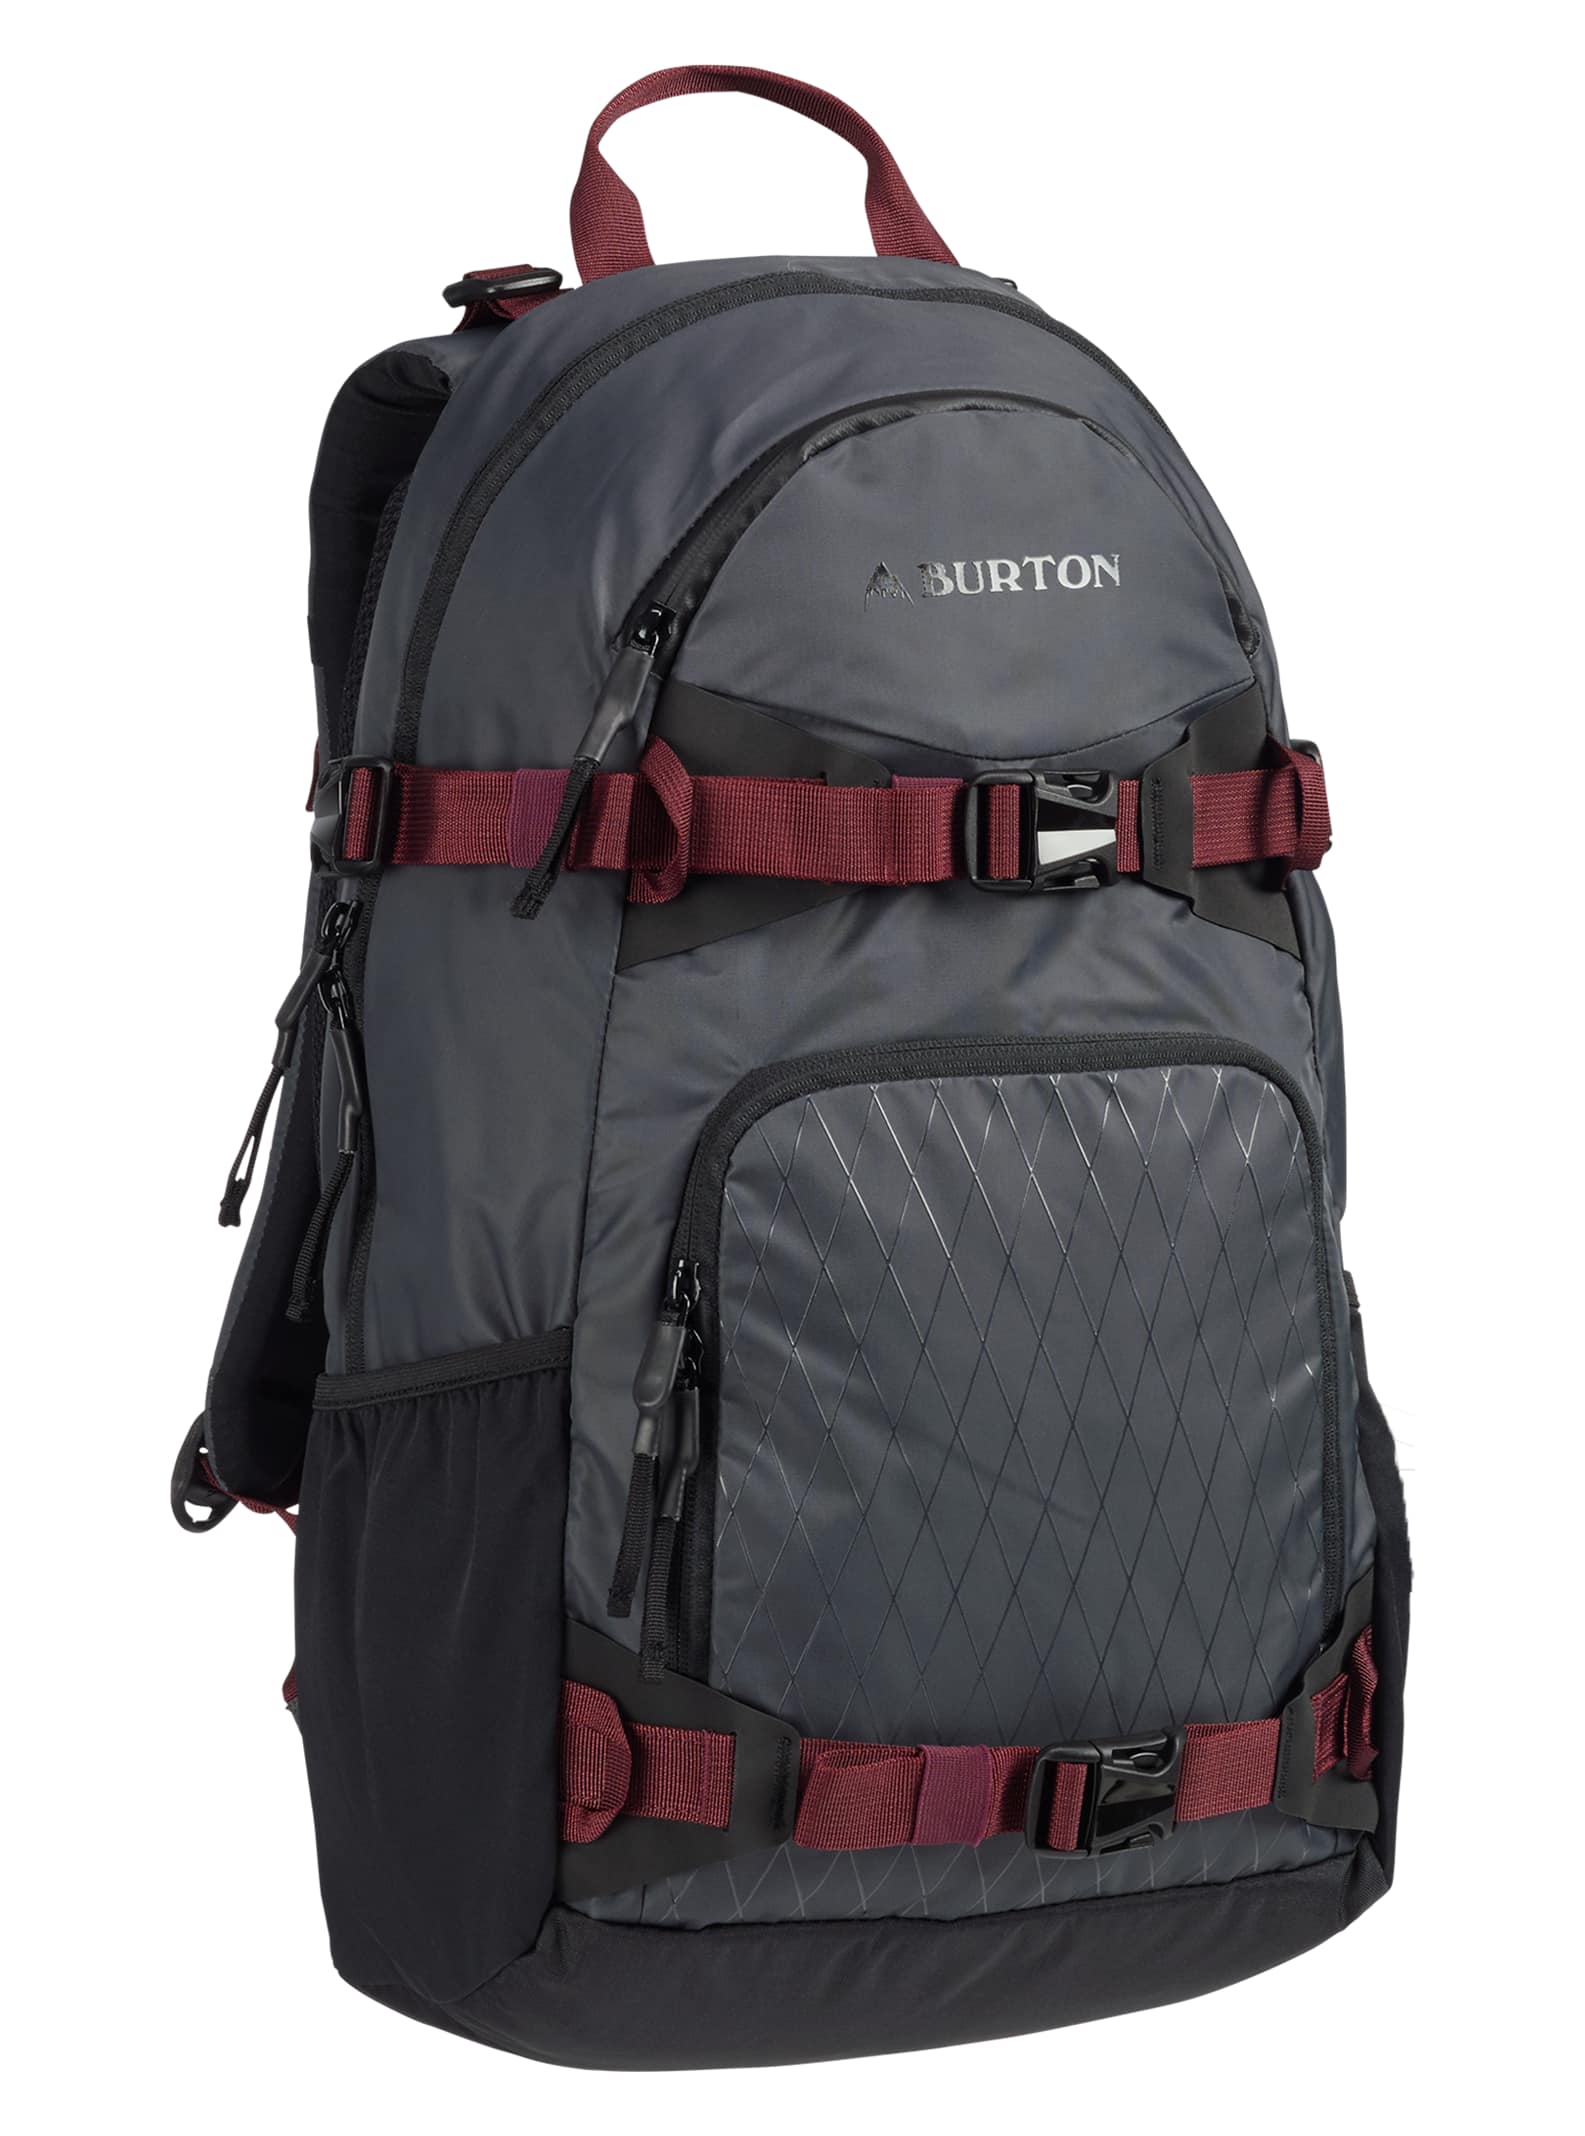 Burton Women's Rider's 25L Backpack | Burton.com Fall 2019 US